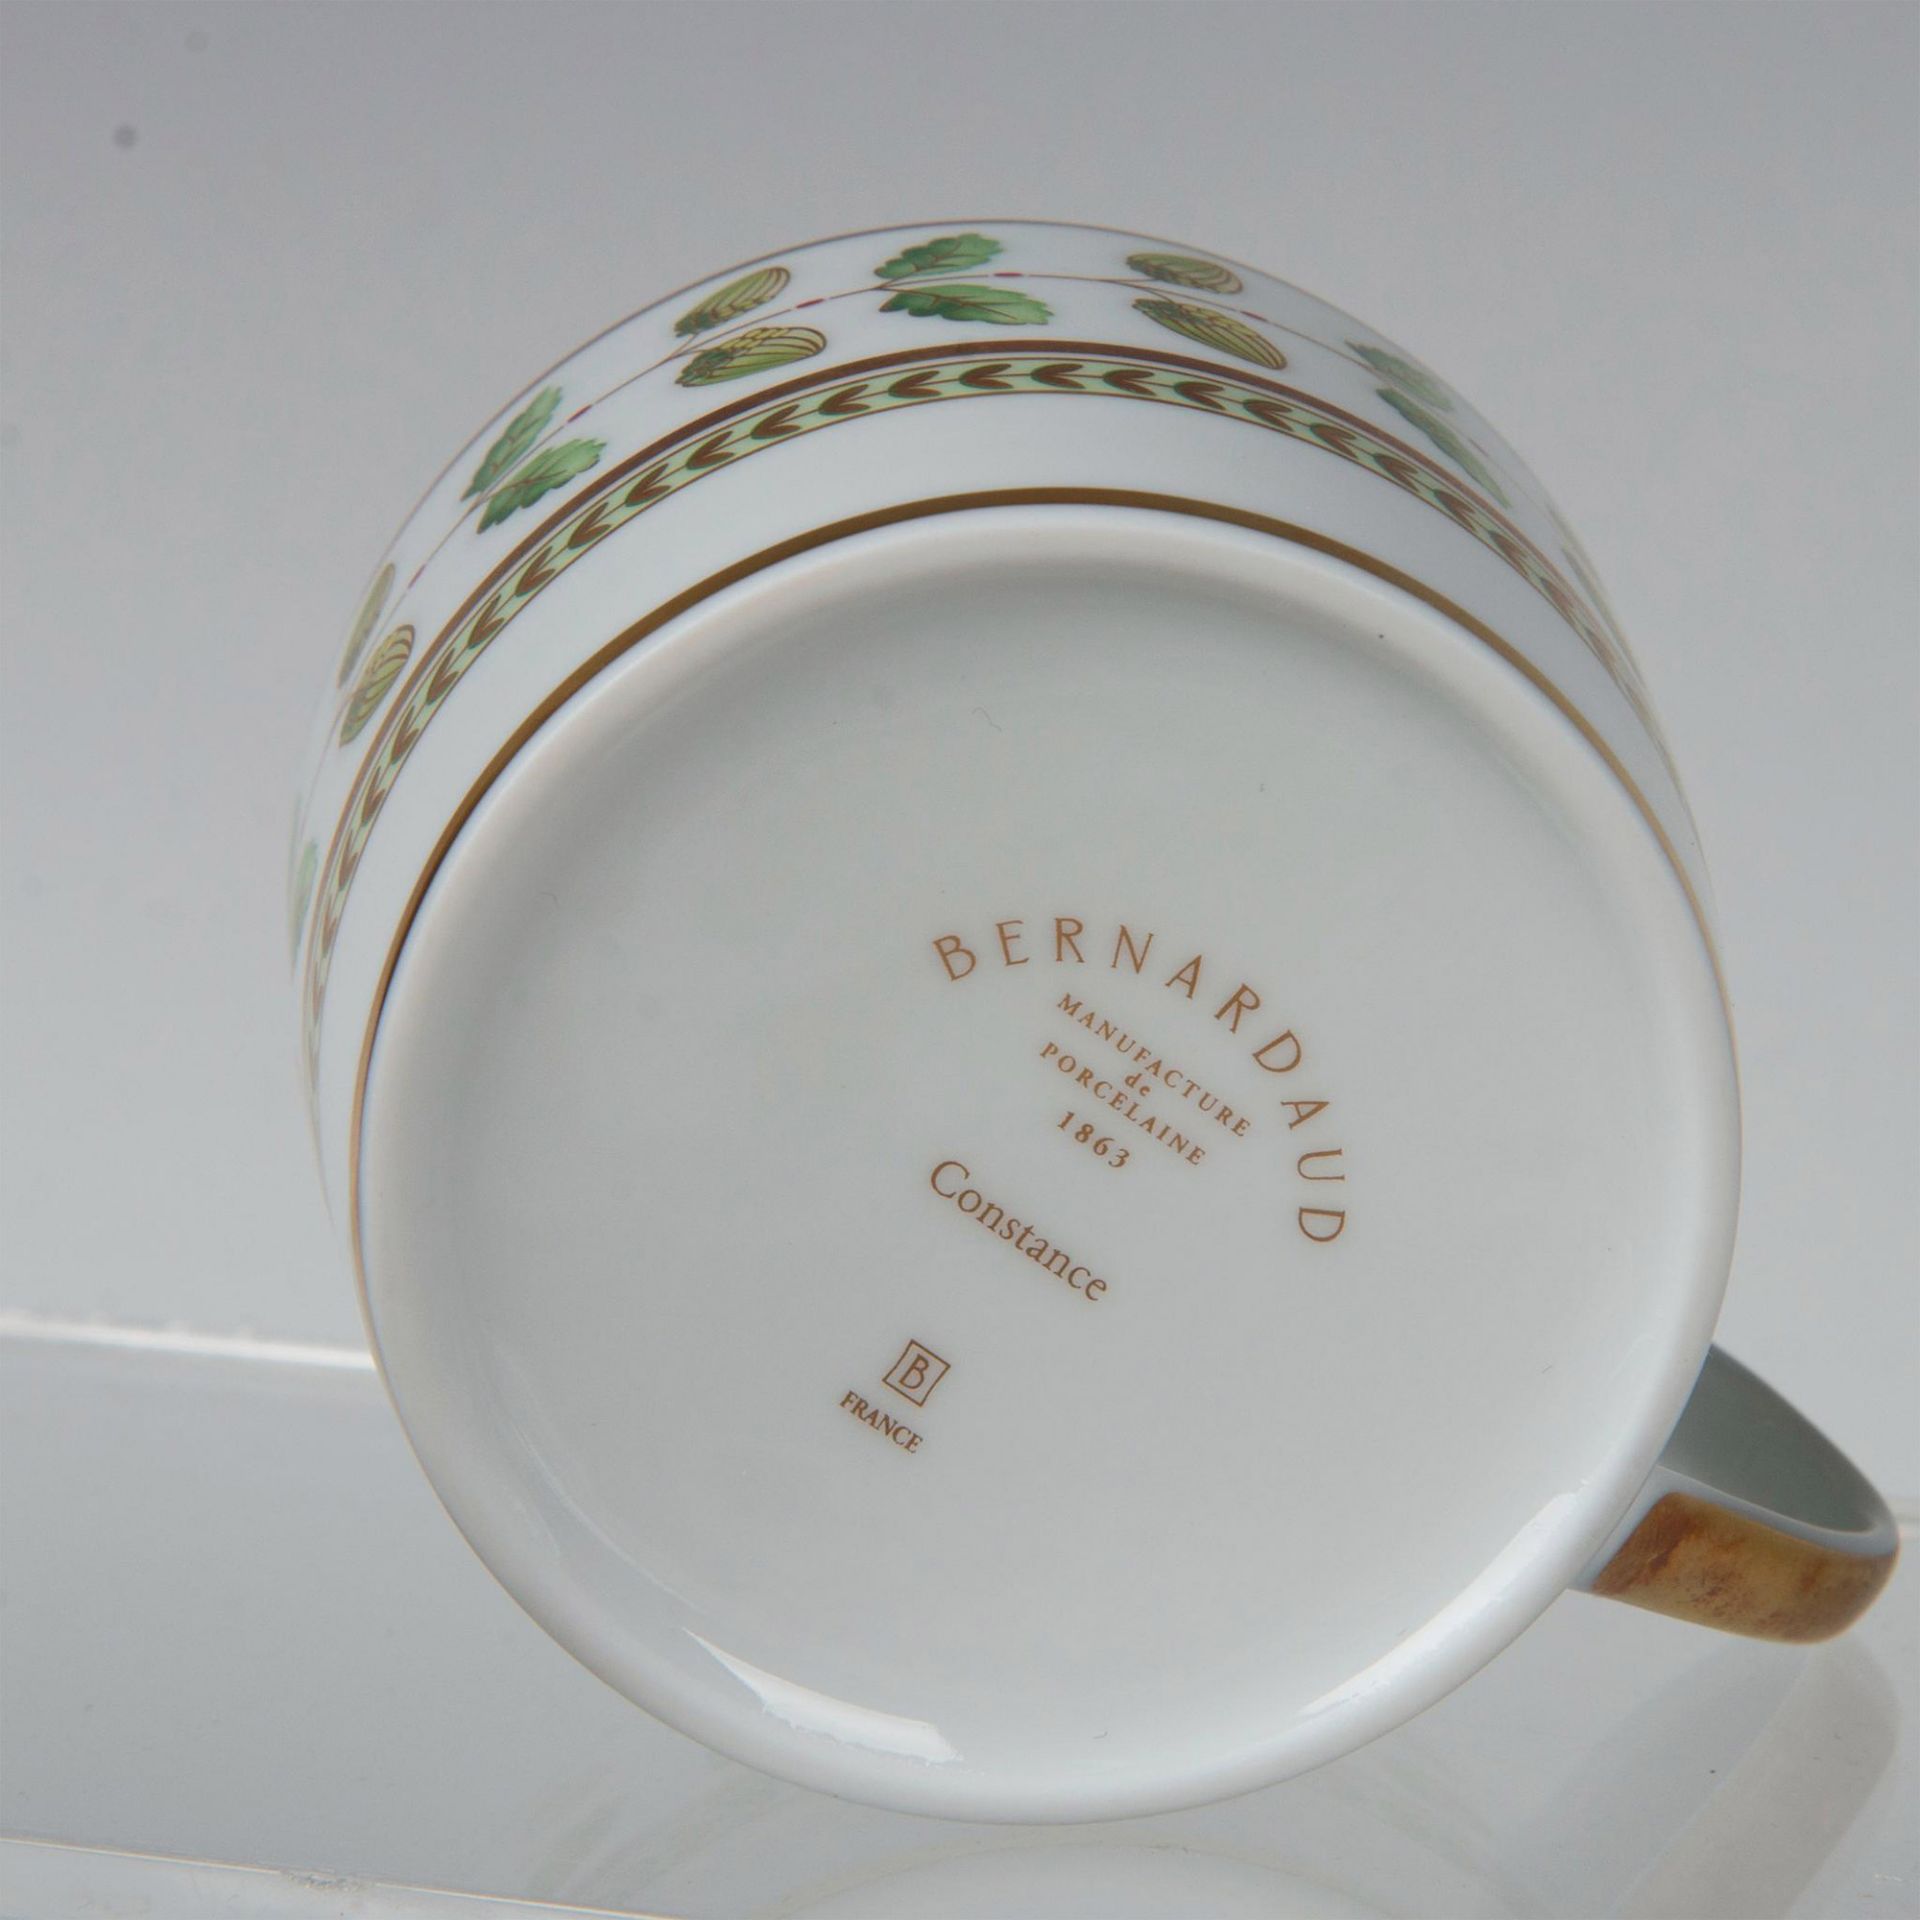 60pc Bernardaud Limoges Porcelain Service for 12, Constance - Image 6 of 6